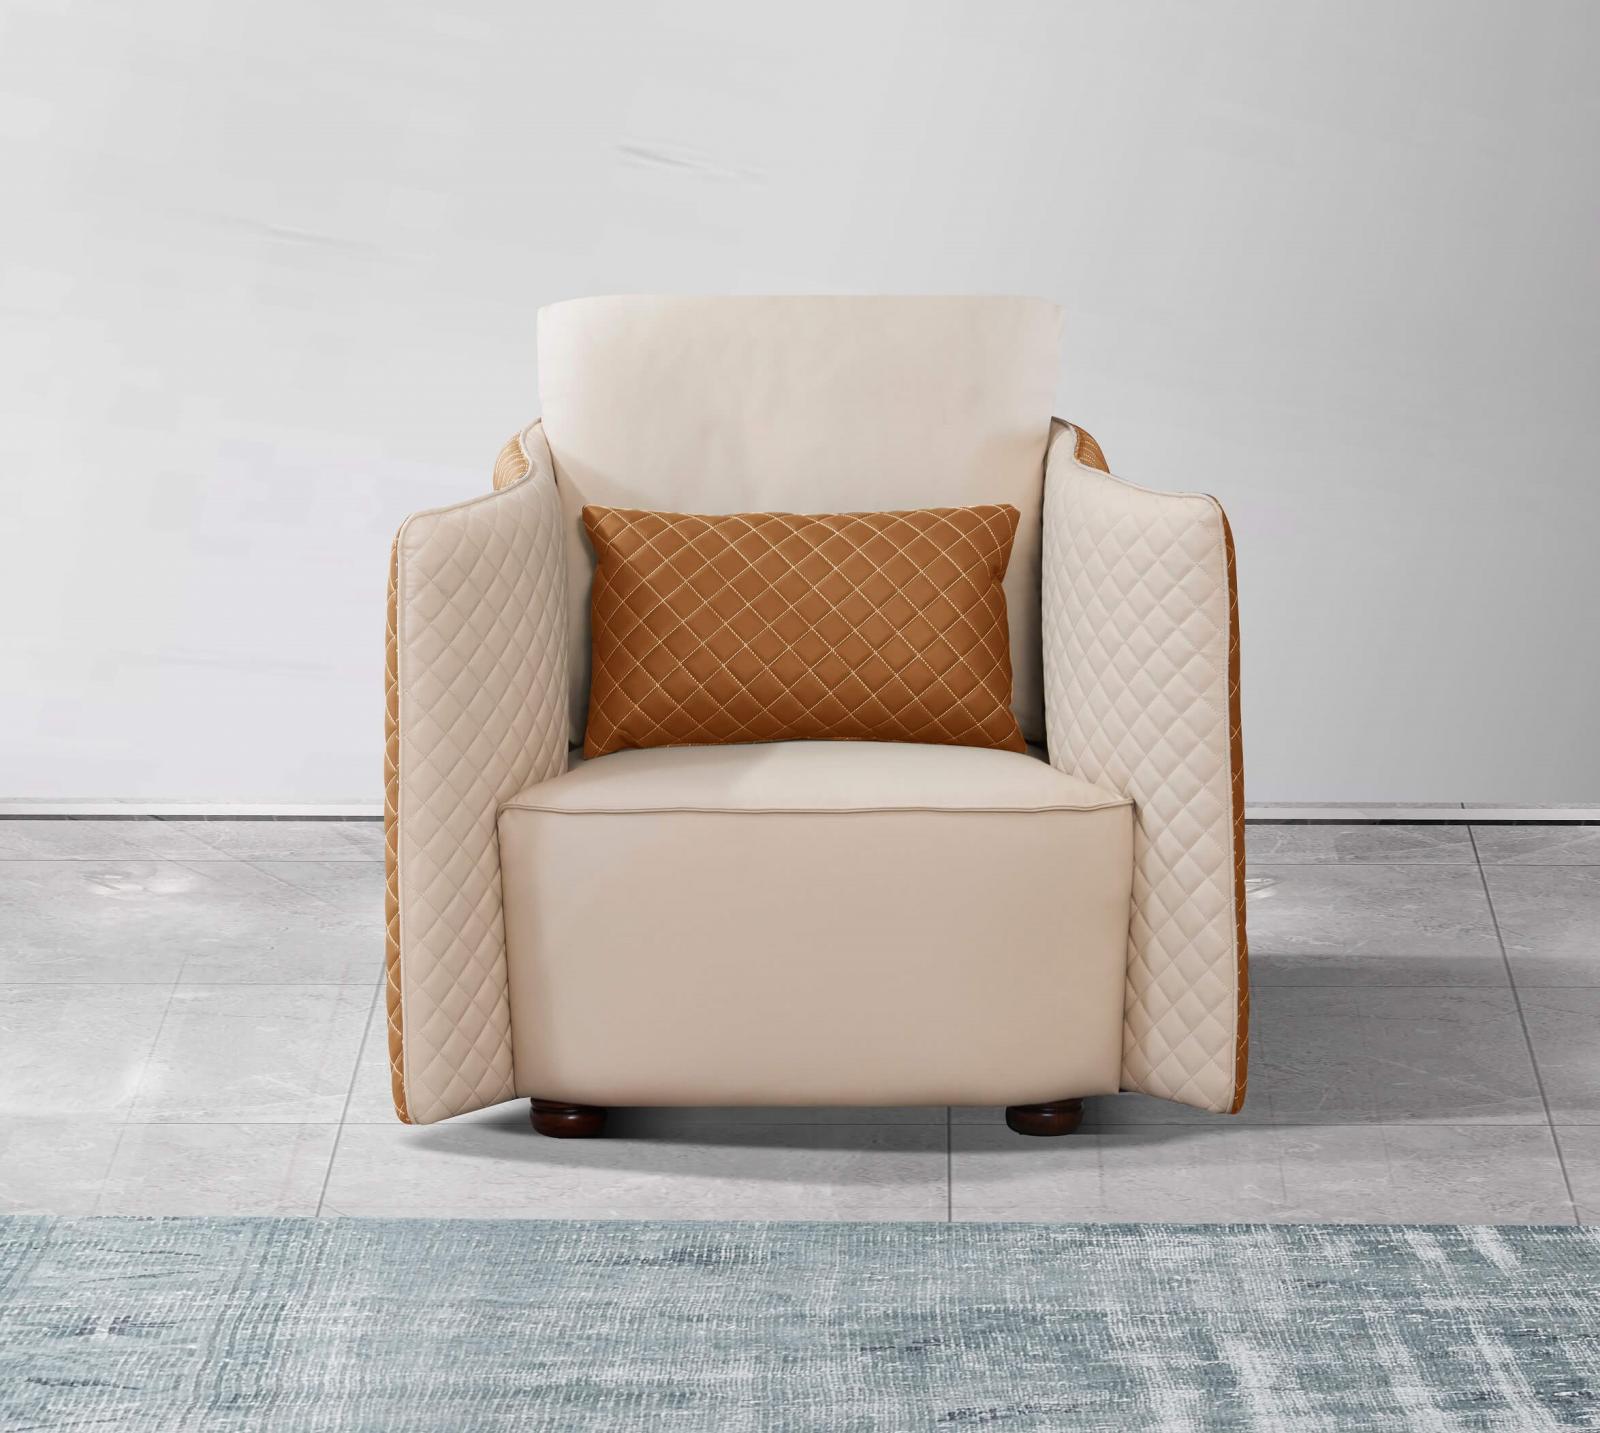 Luxury Italian Leather Beige & Orange Arm Chair MAKASSAR EUROPEAN FURNITURE - image 3 of 3